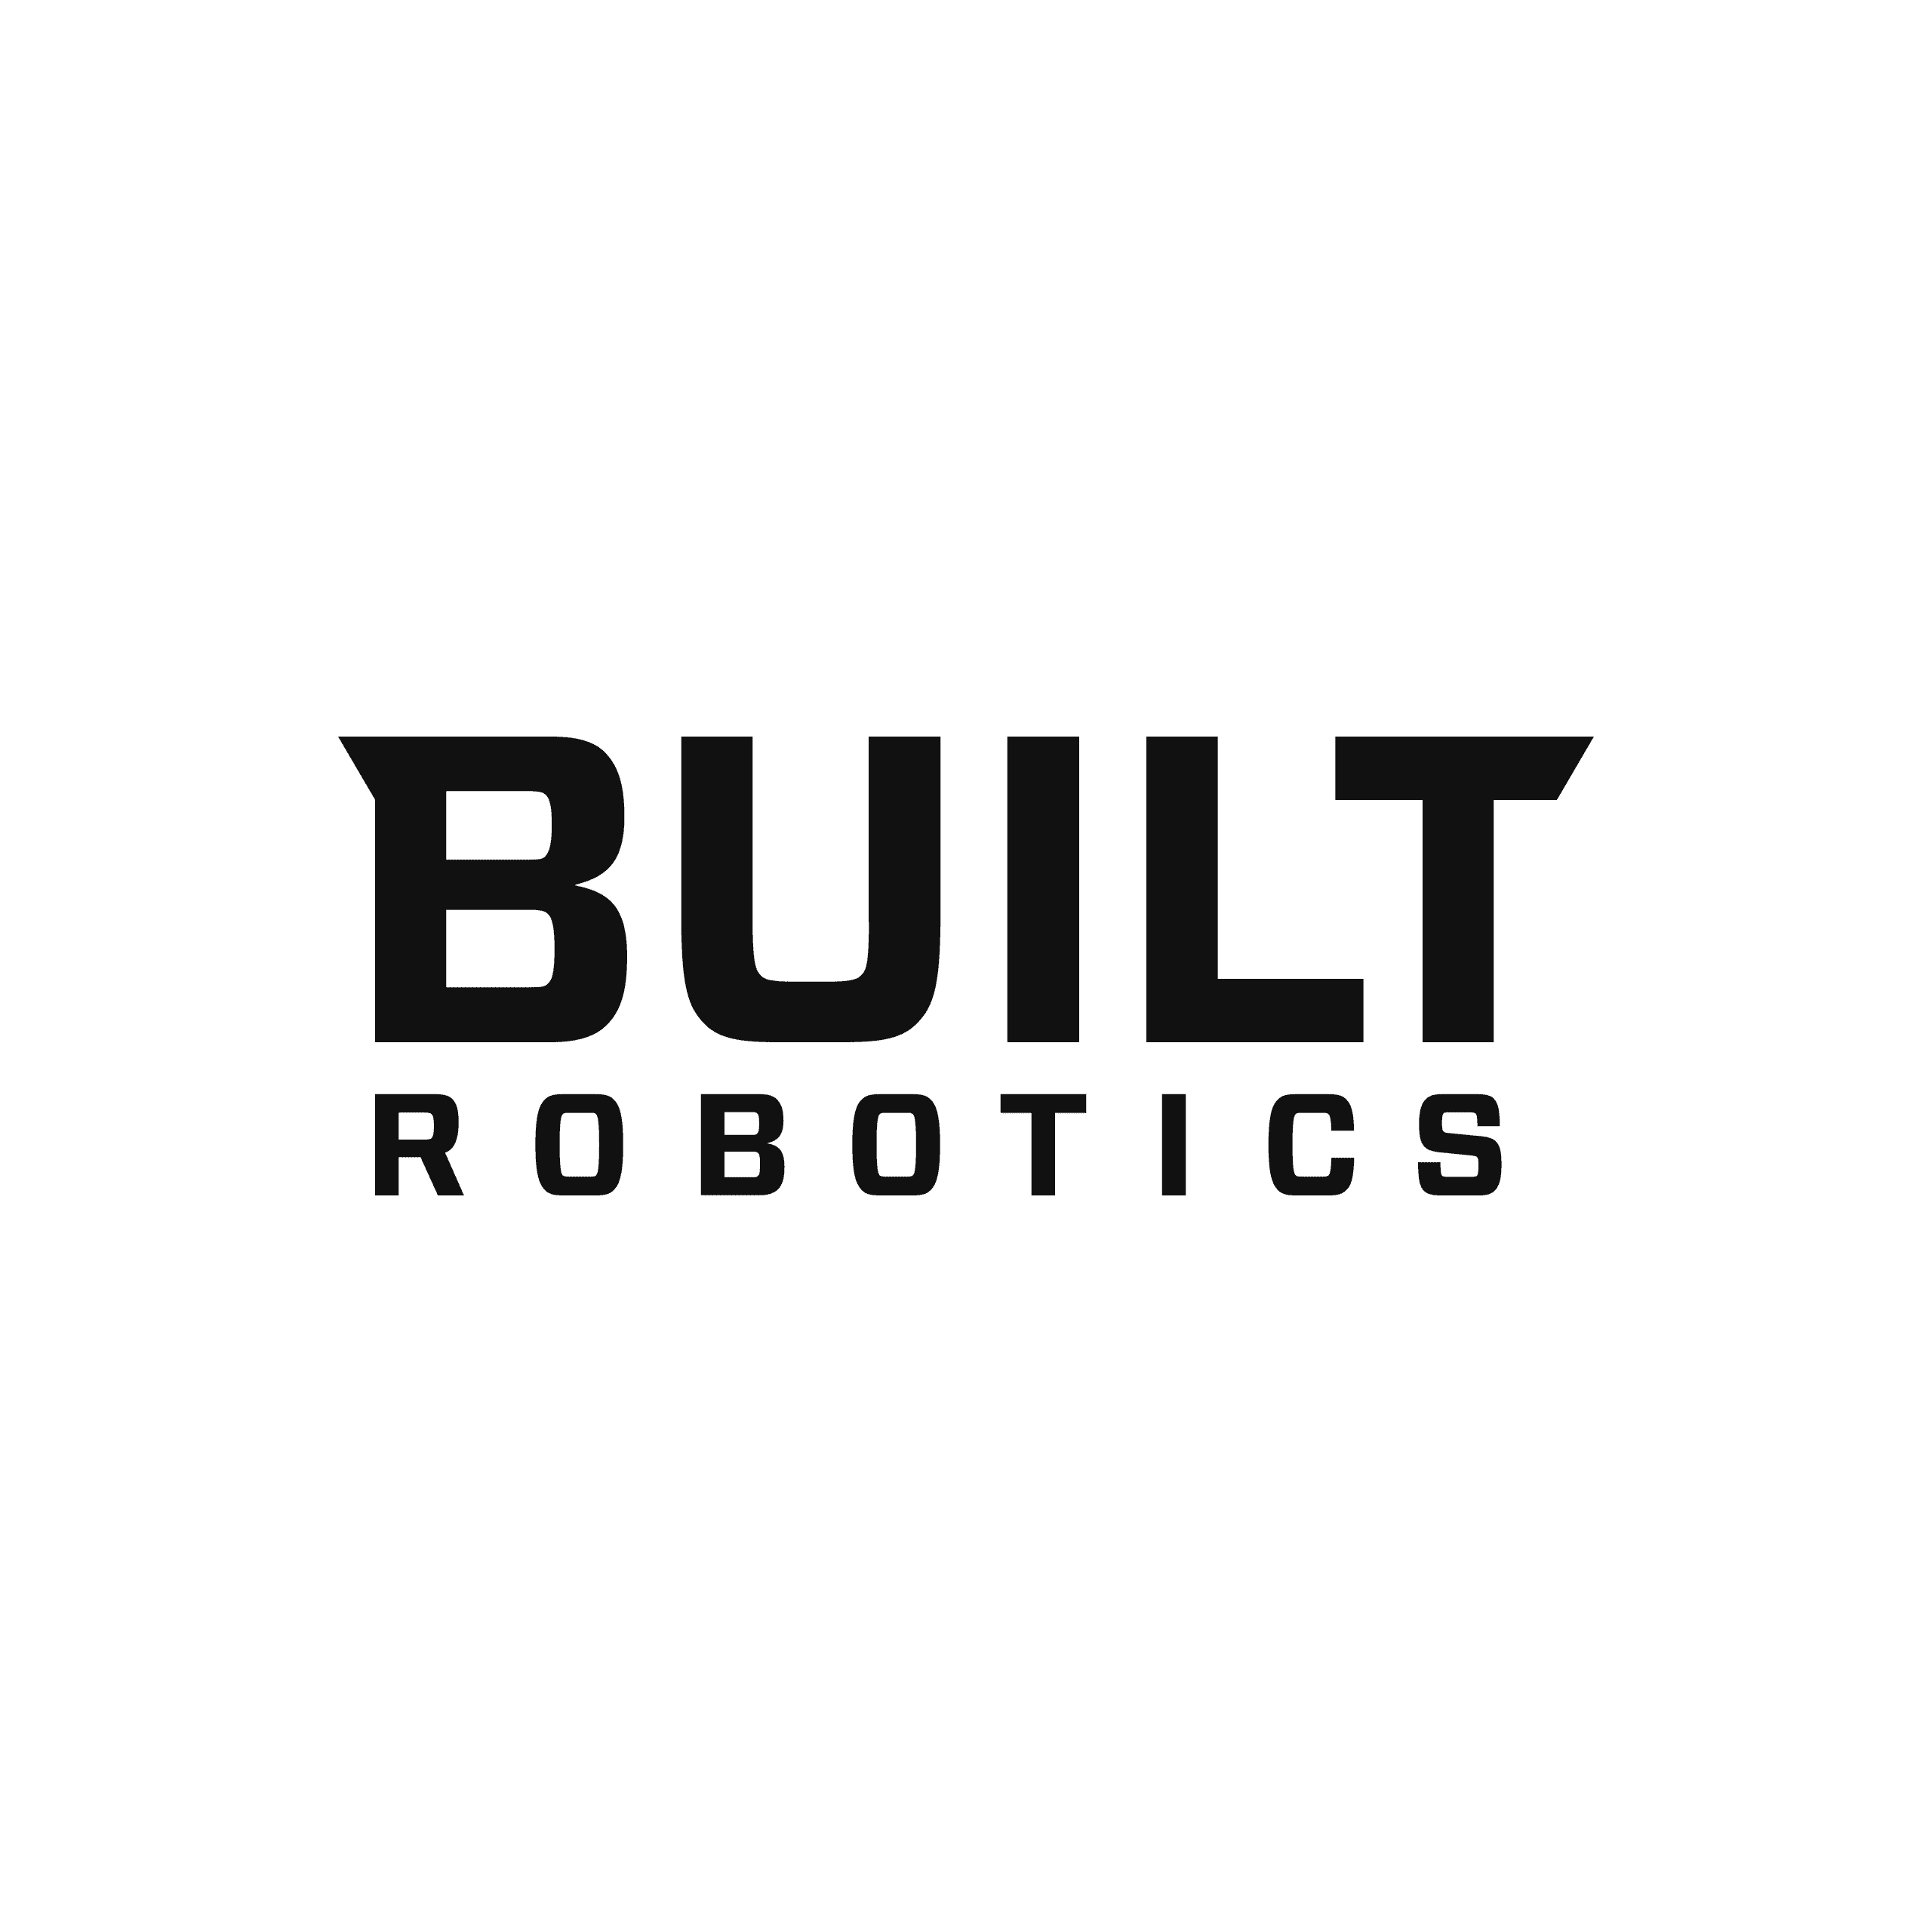 Built robotics logo stacked